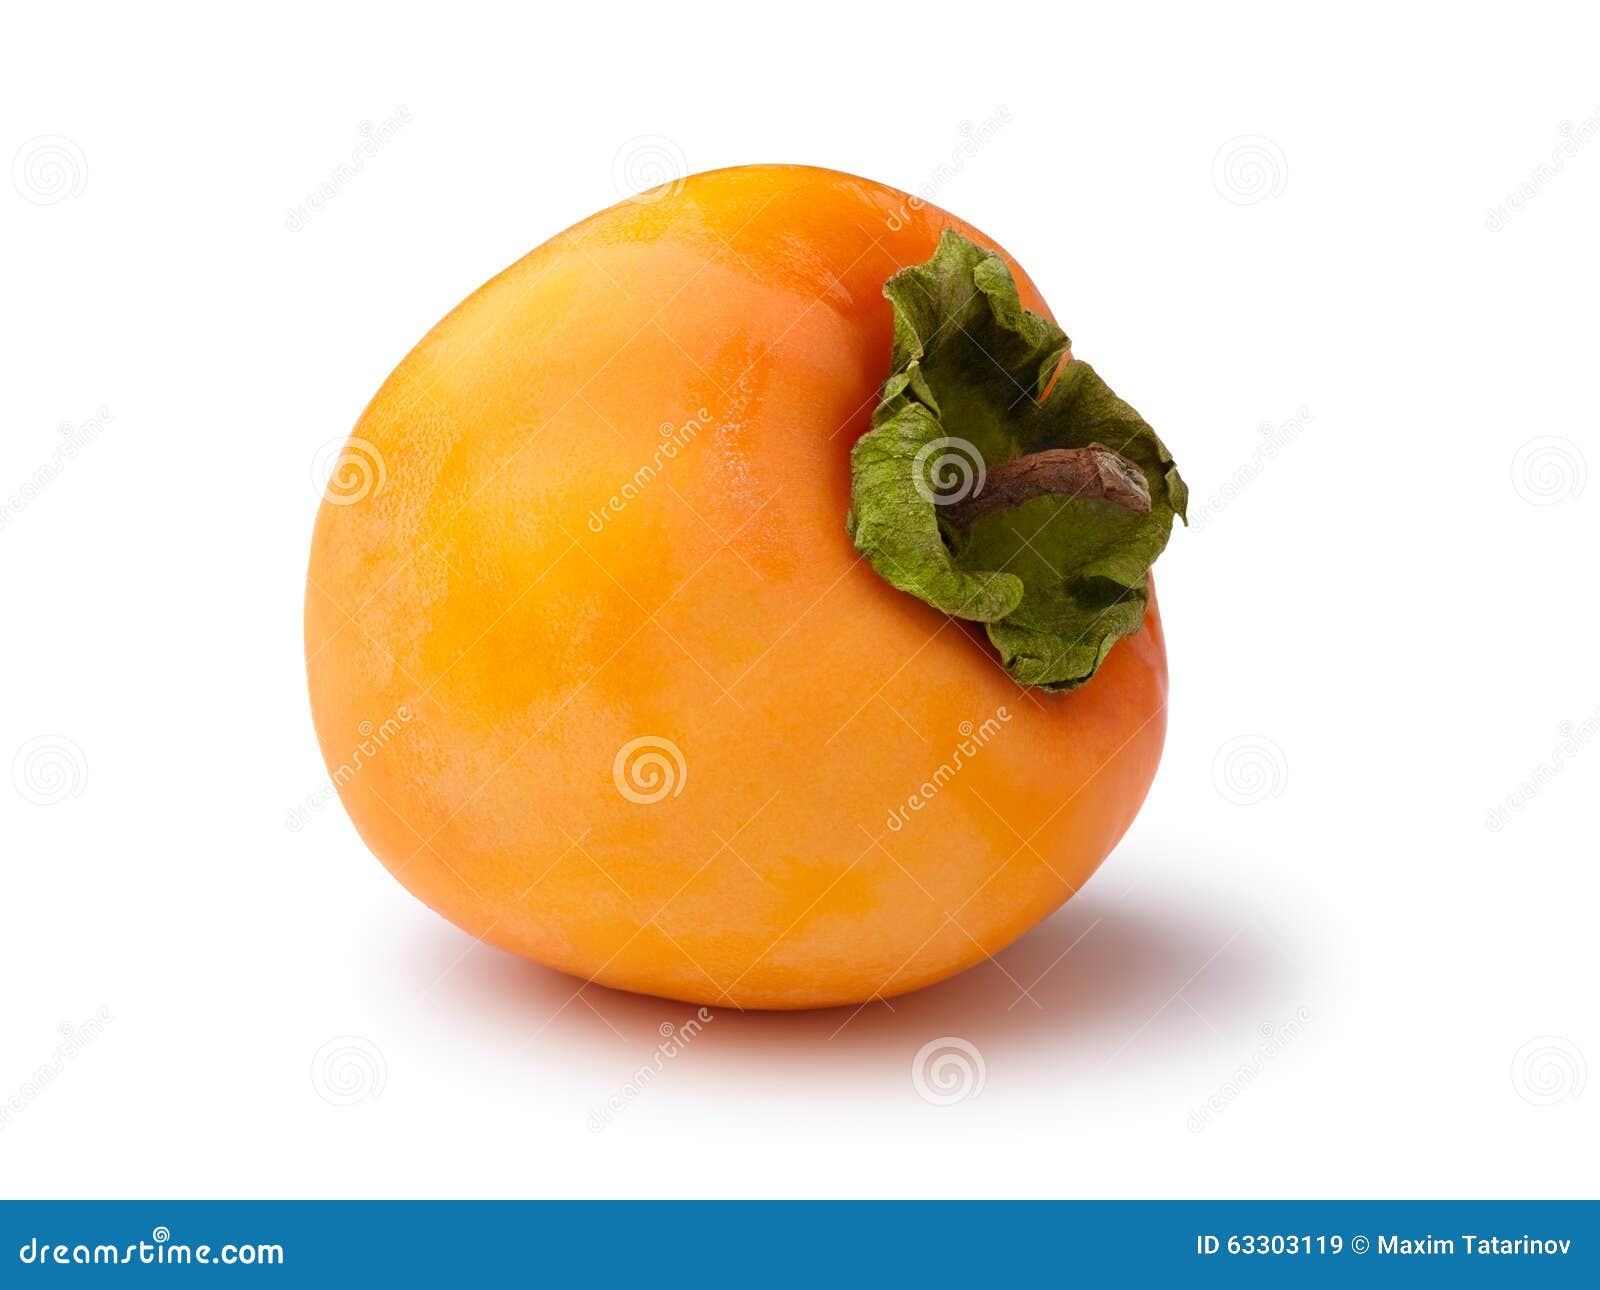 yellow persimmon 